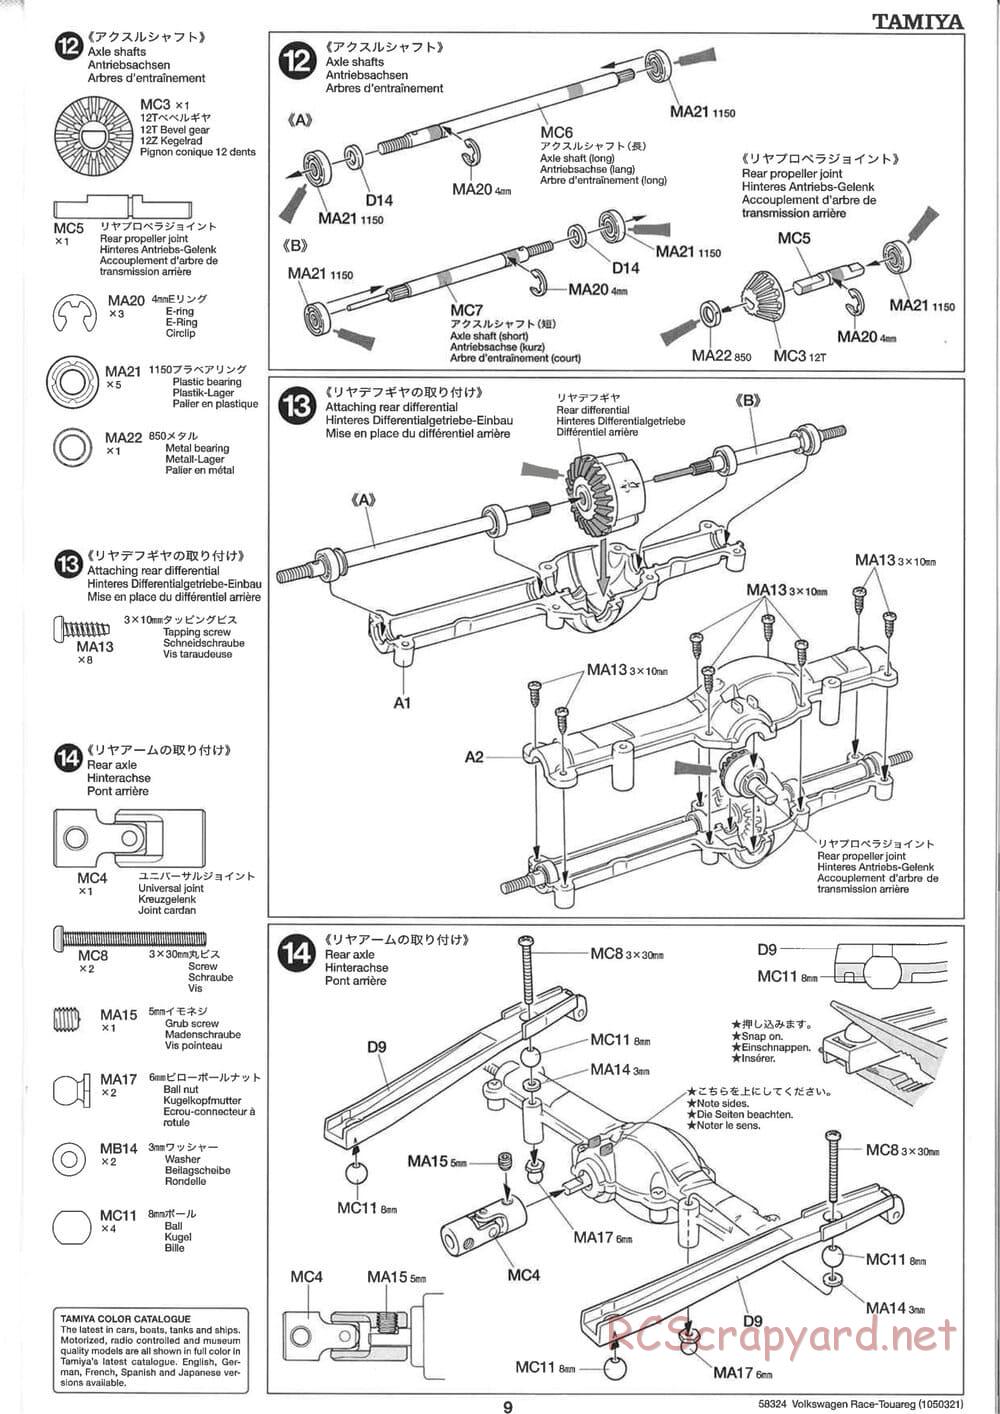 Tamiya - Volkswagen Race-Touareg - CC-01 Chassis - Manual - Page 9